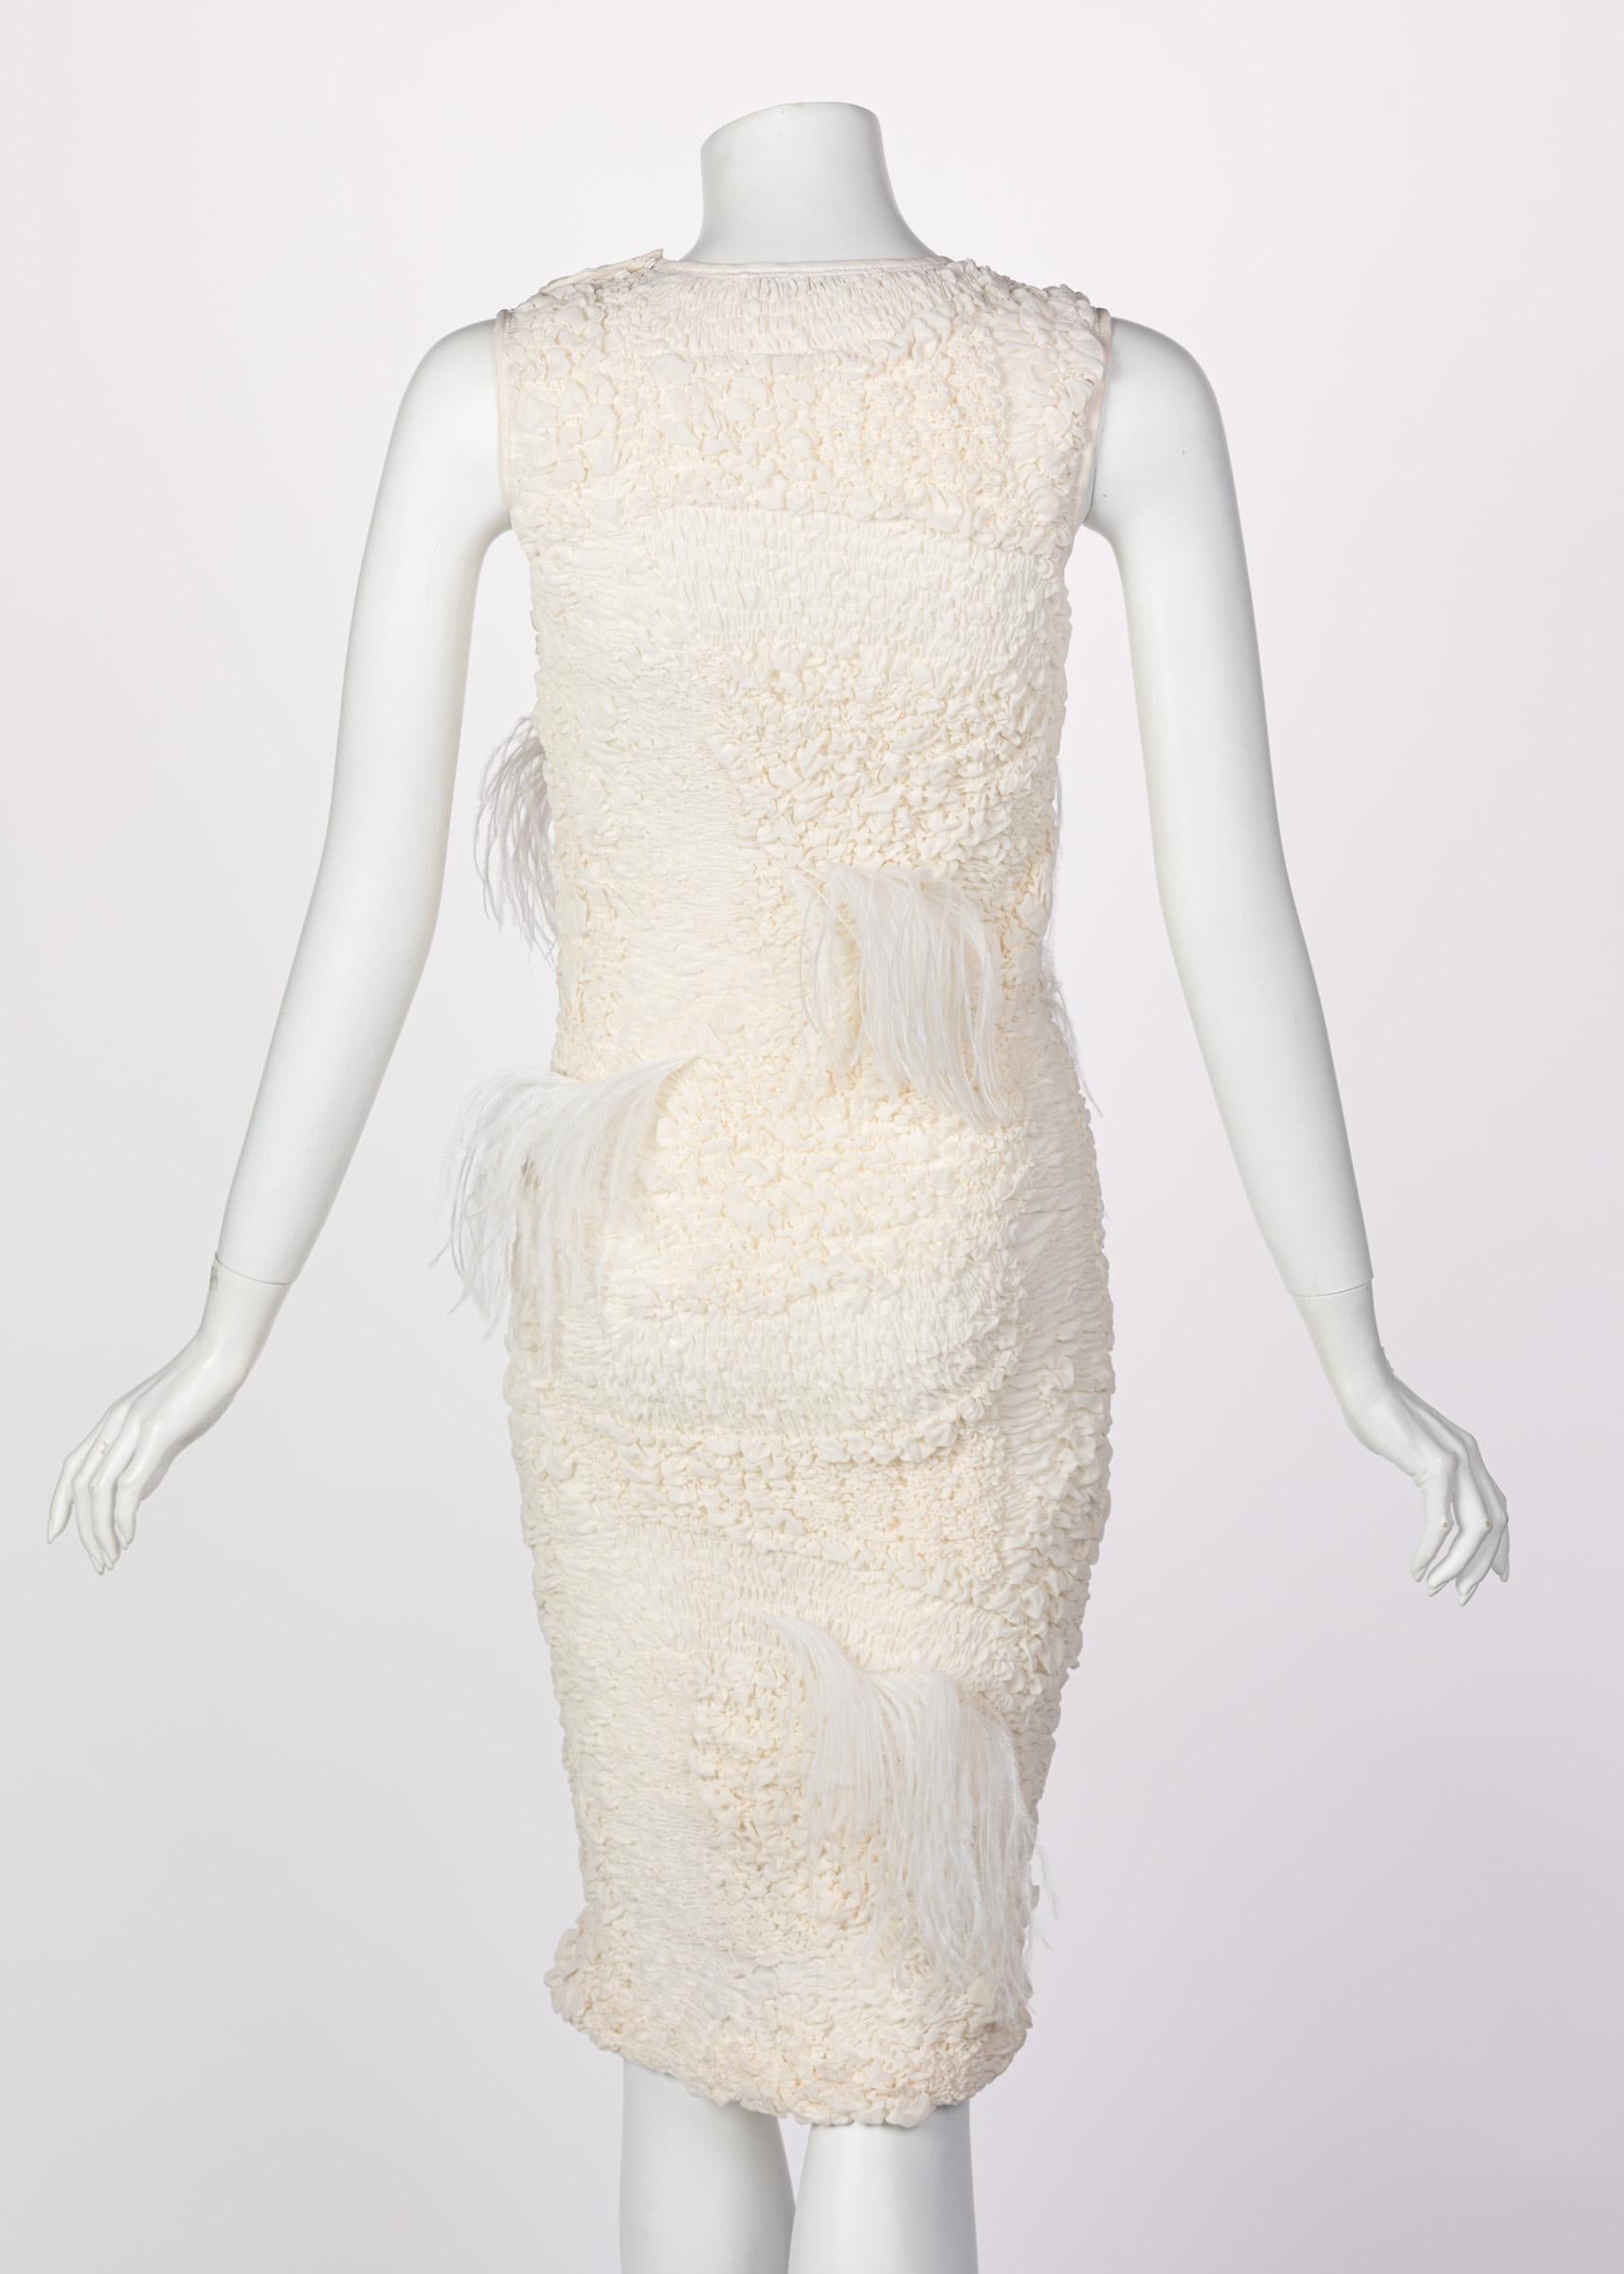 Nina Ricci Ivory Silk Feather Embellished Dress, Spring 2016 For Sale 1